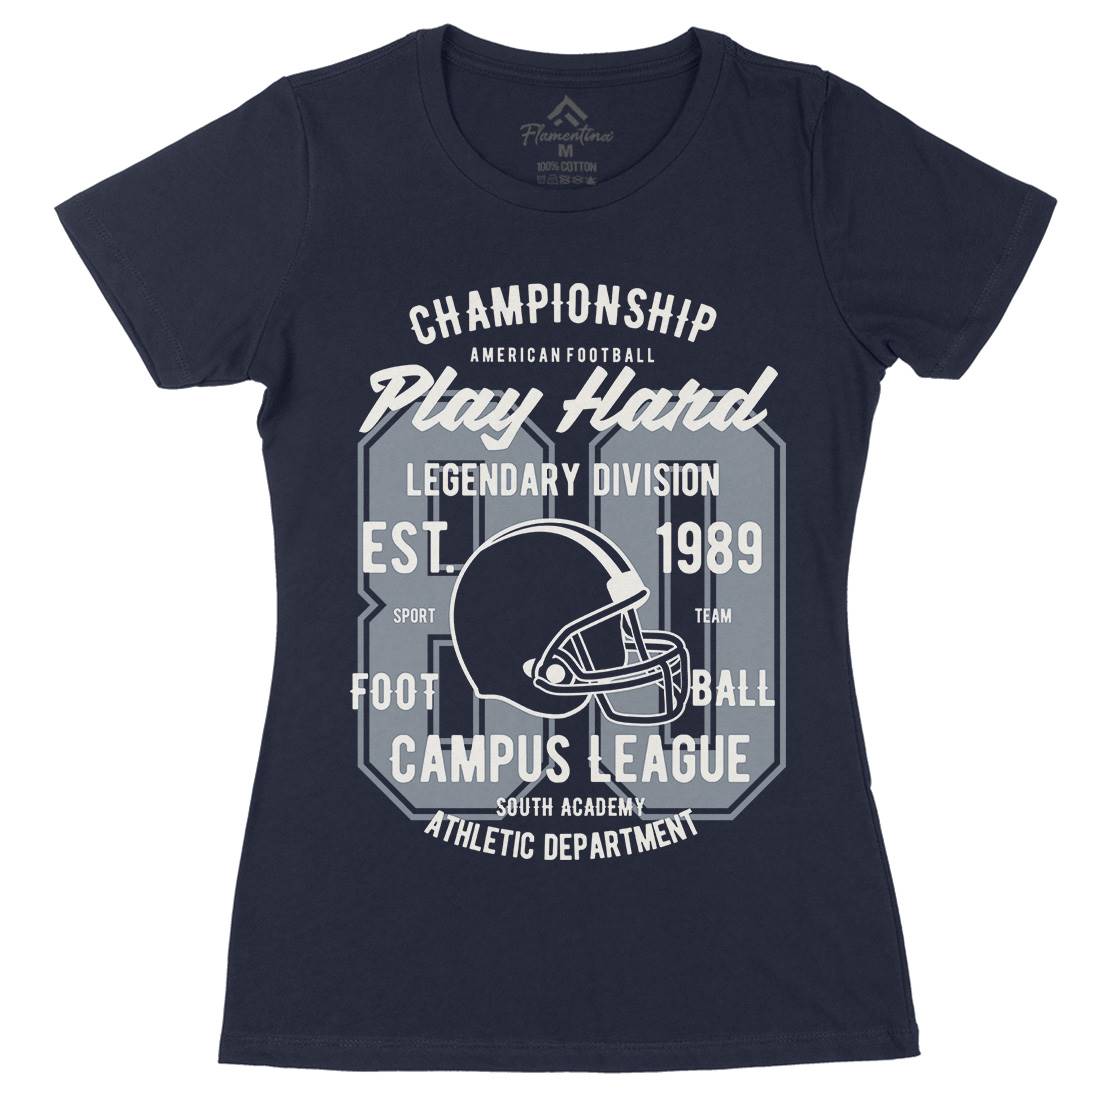 Play Hard Football Womens Organic Crew Neck T-Shirt Sport B435